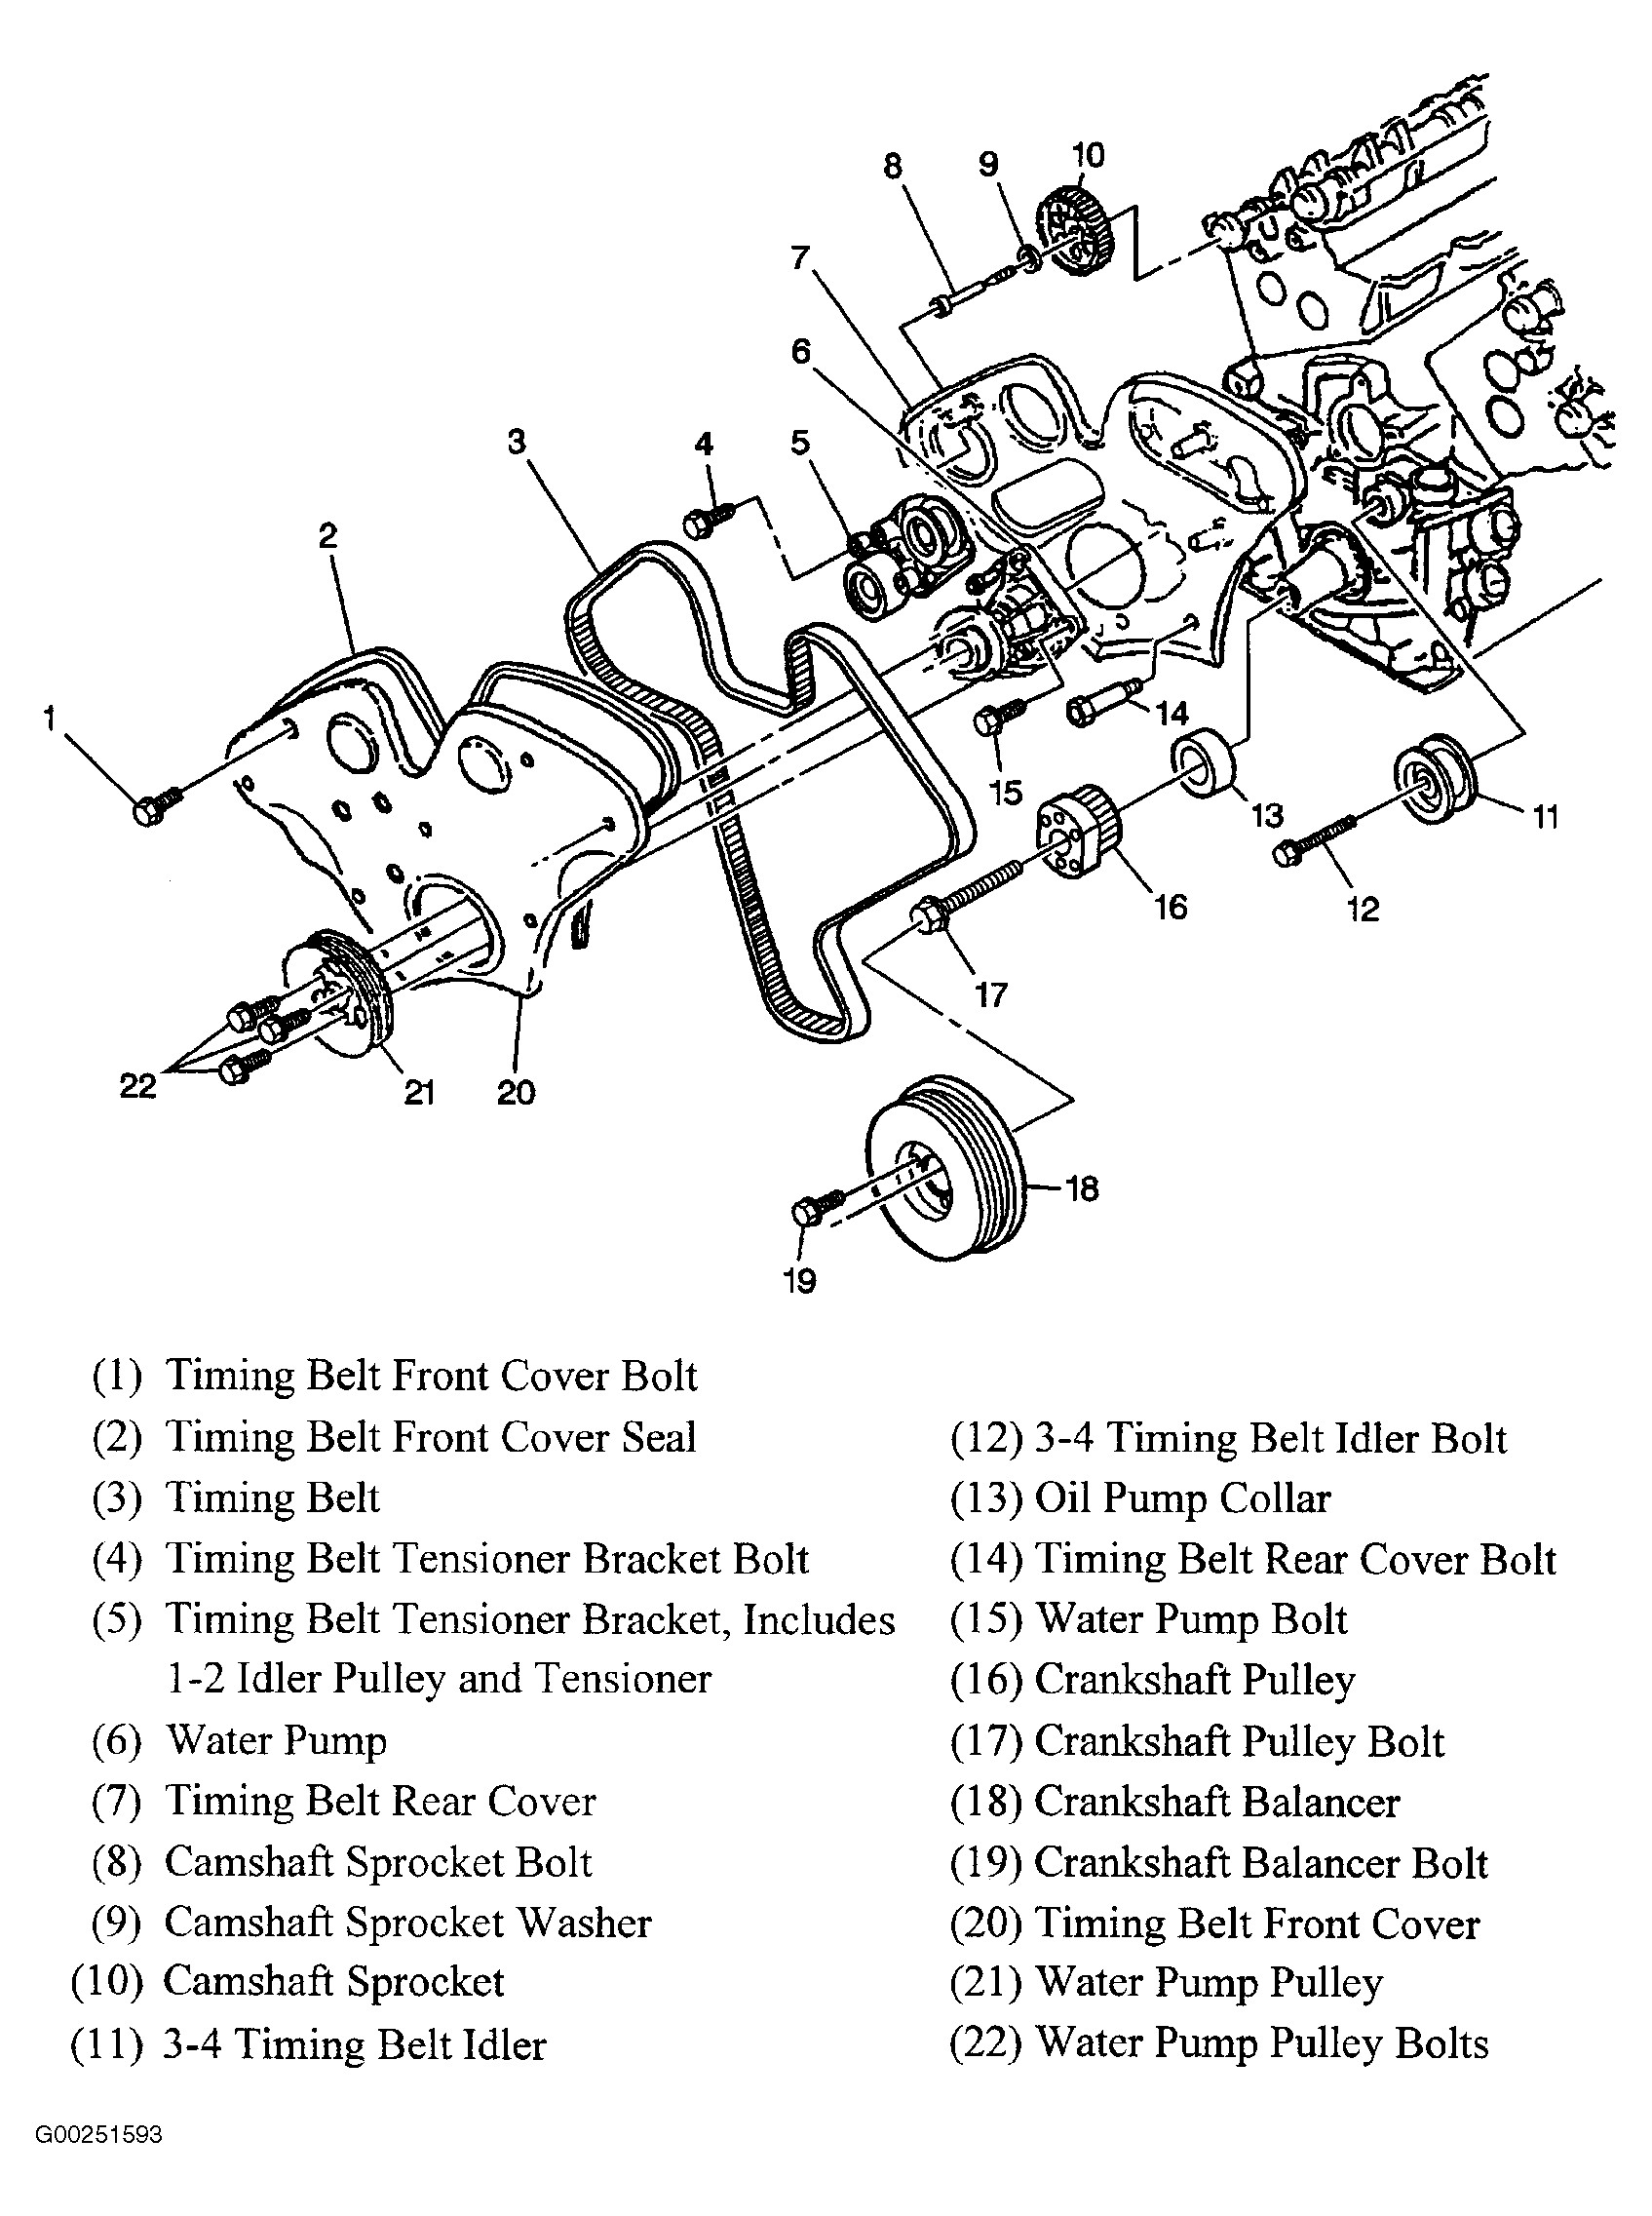 Auto Parts Diagrams Free 2003 Cadillac Cts Serpentine Belt Diagram Auto Of Auto Parts Diagrams Free